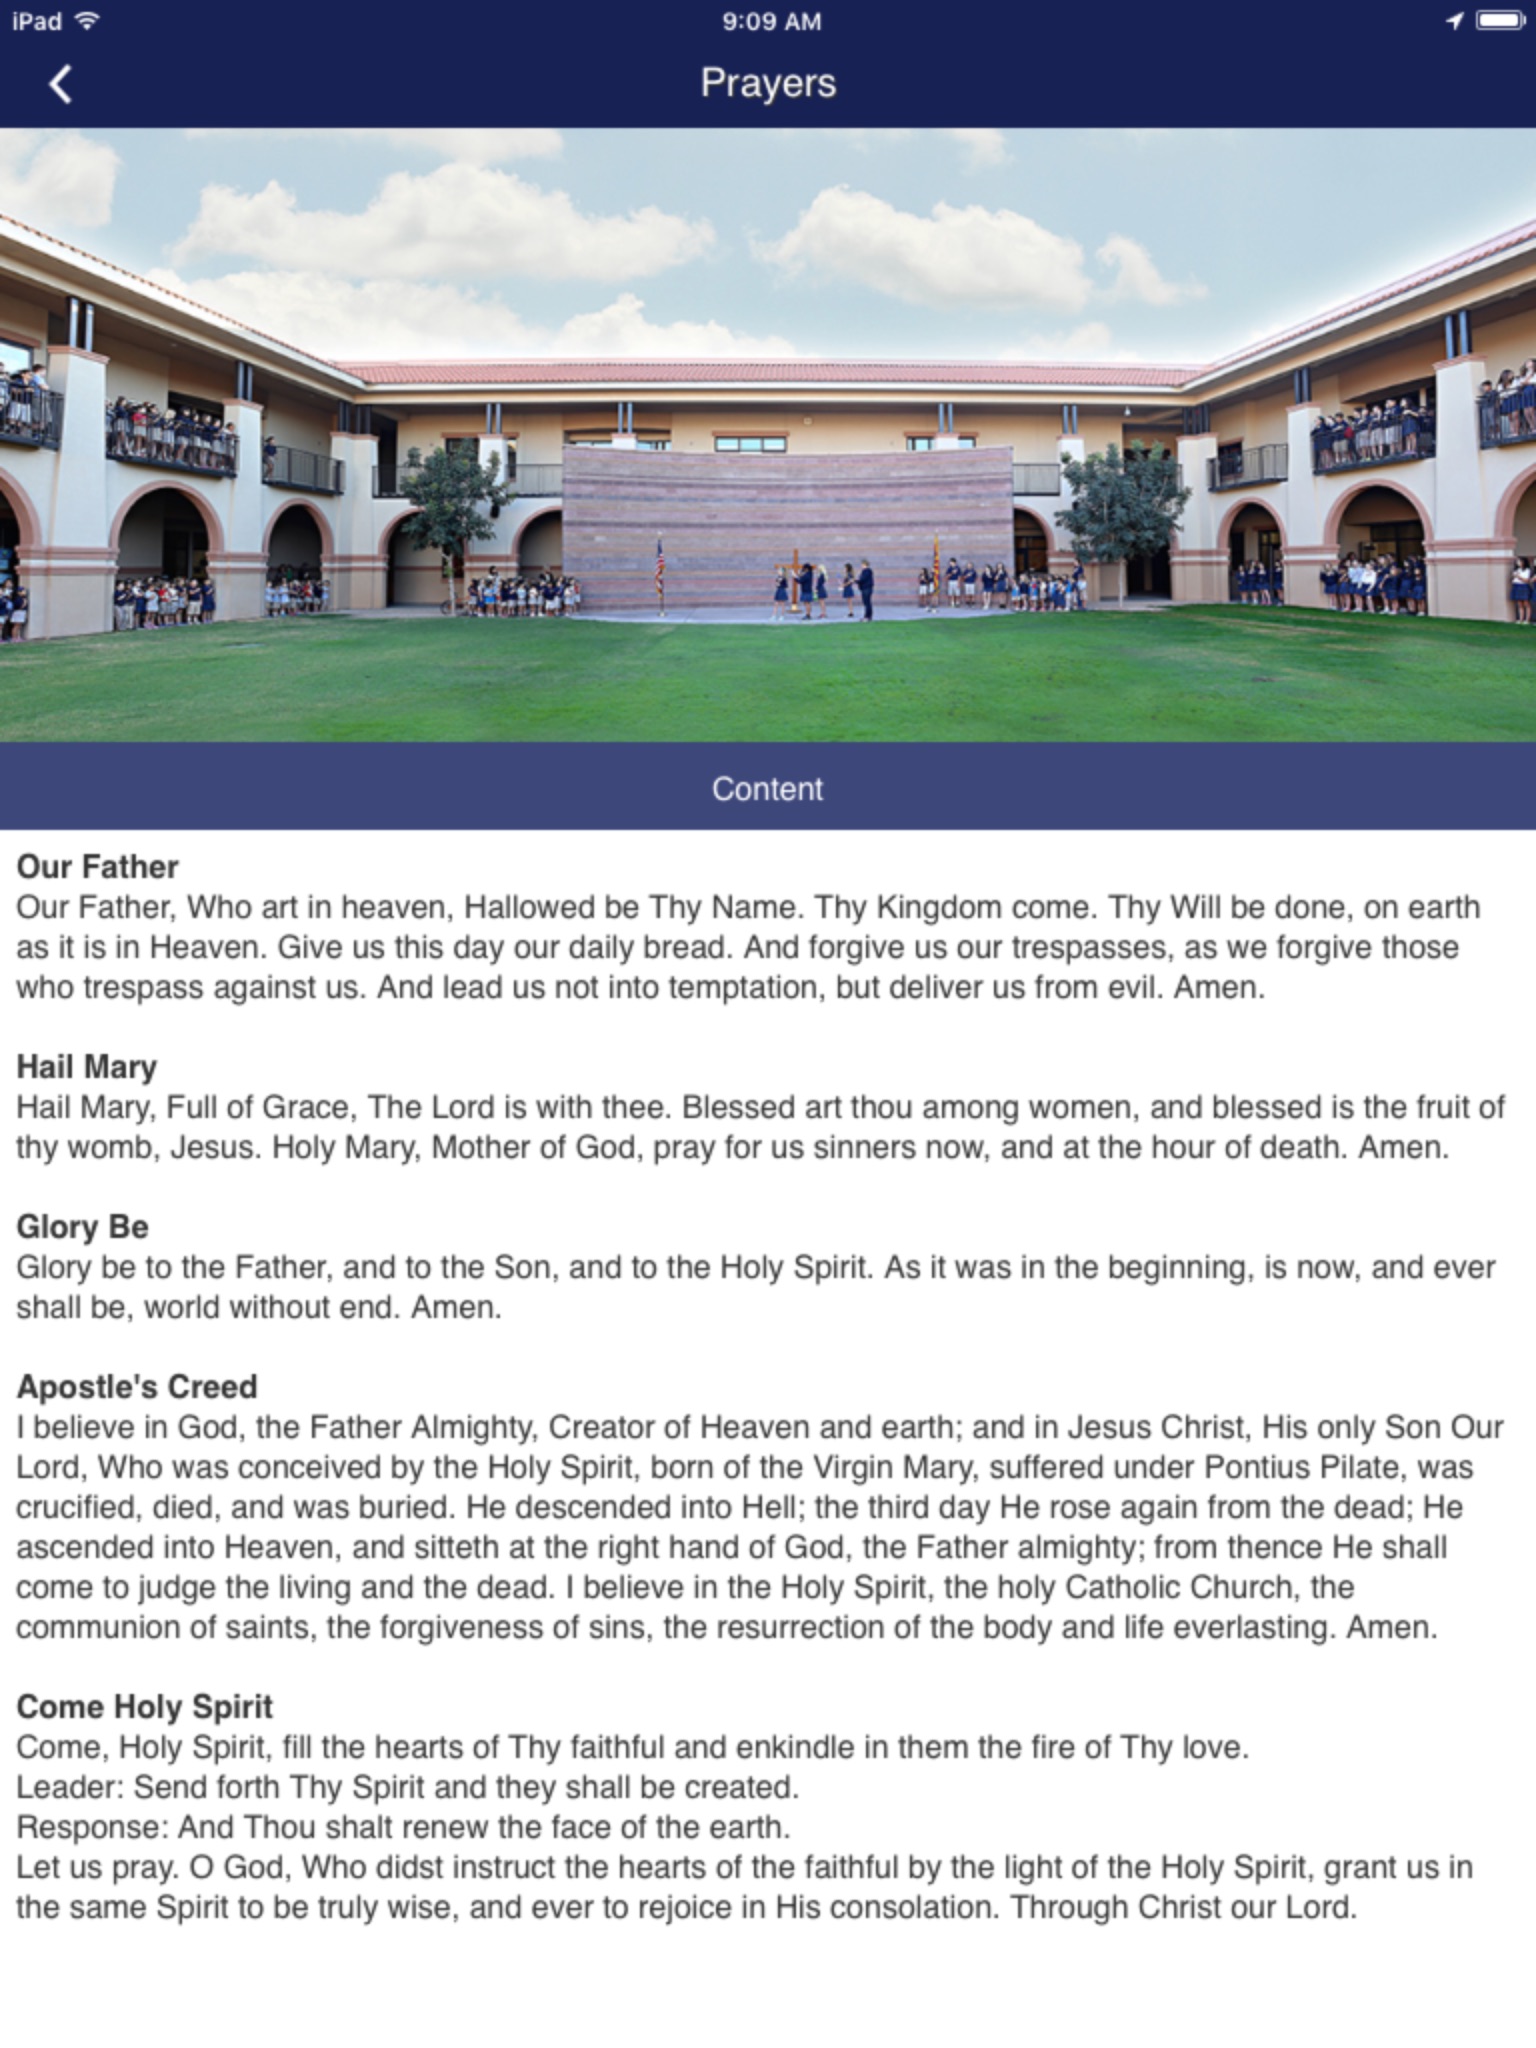 St. Francis Xavier School - AZ screenshot 2